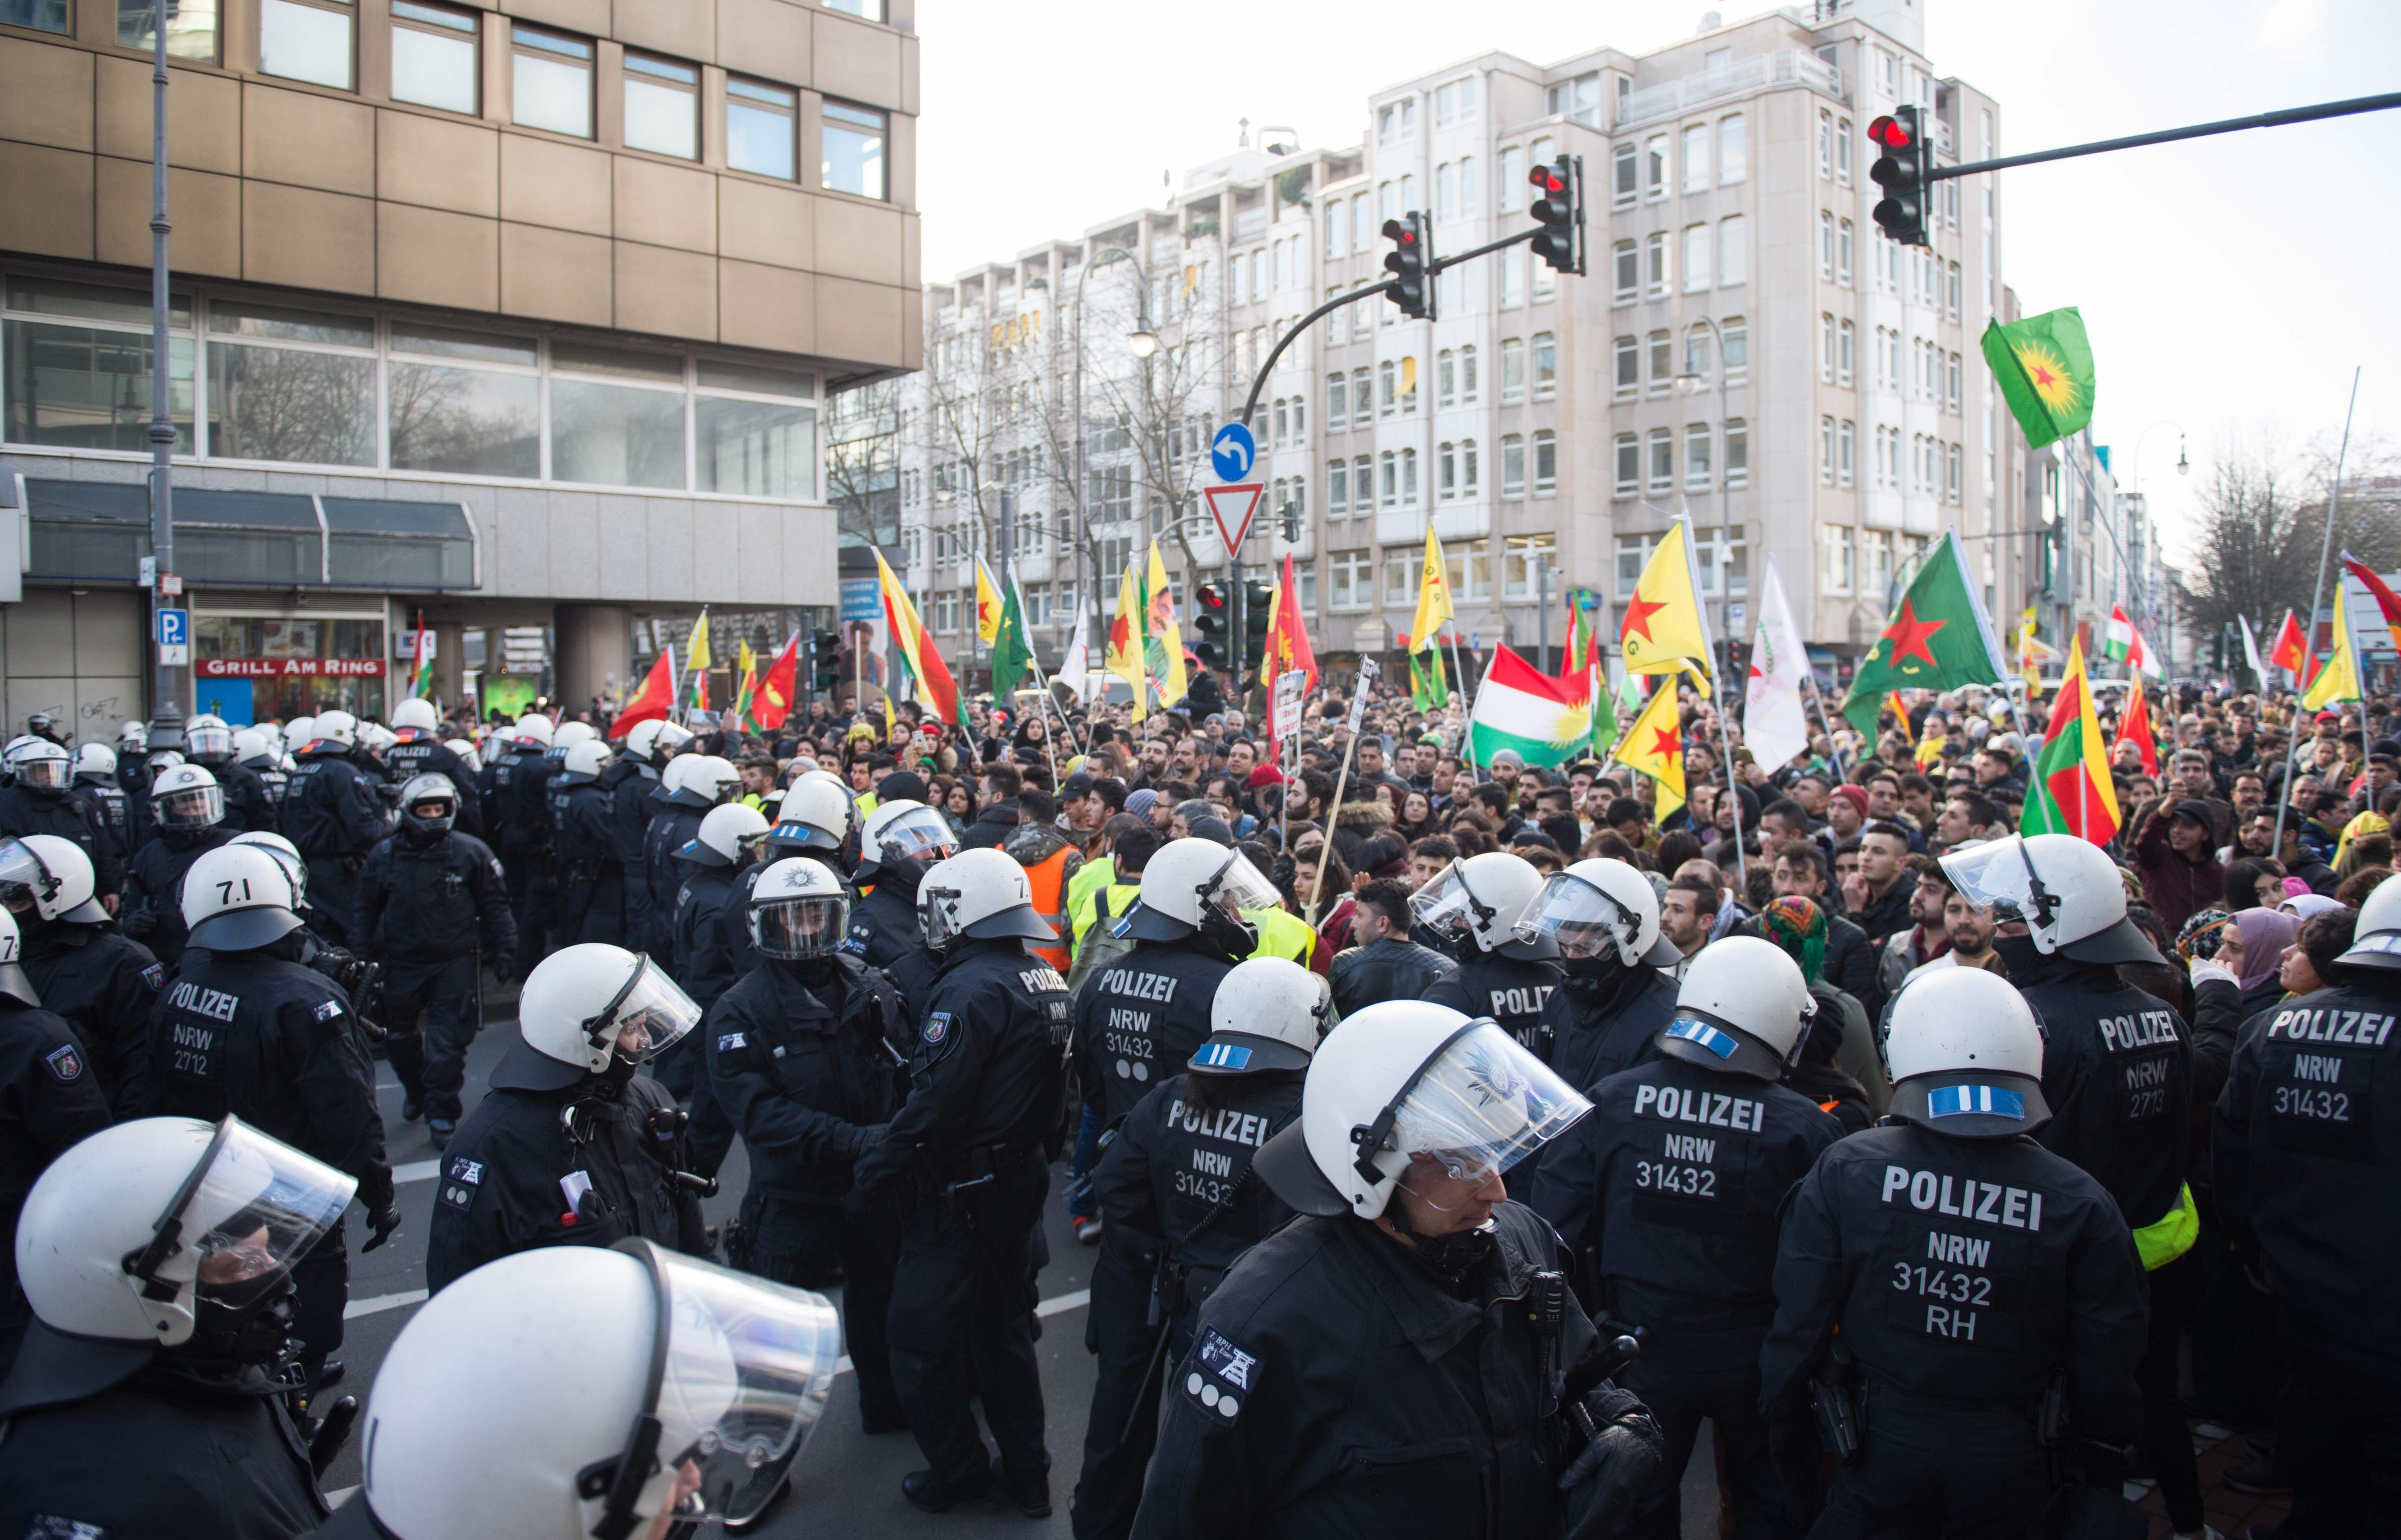 PKK's Germany organizer faces 15 imprisonment | Daily